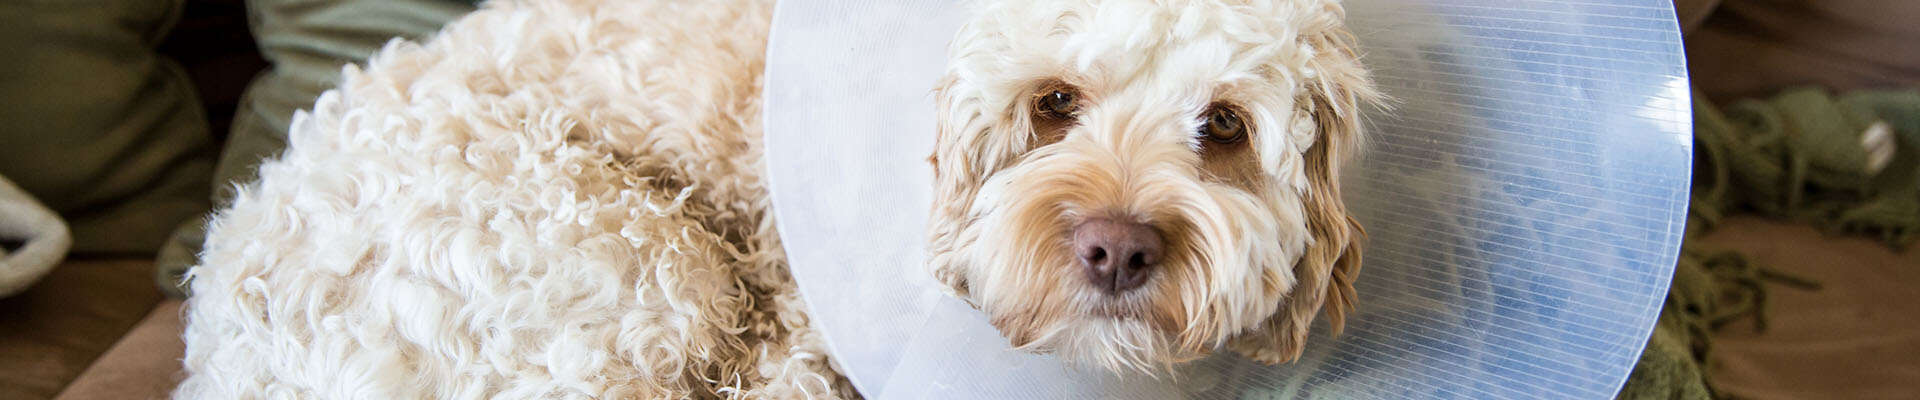 dog wearing plastic cone collar